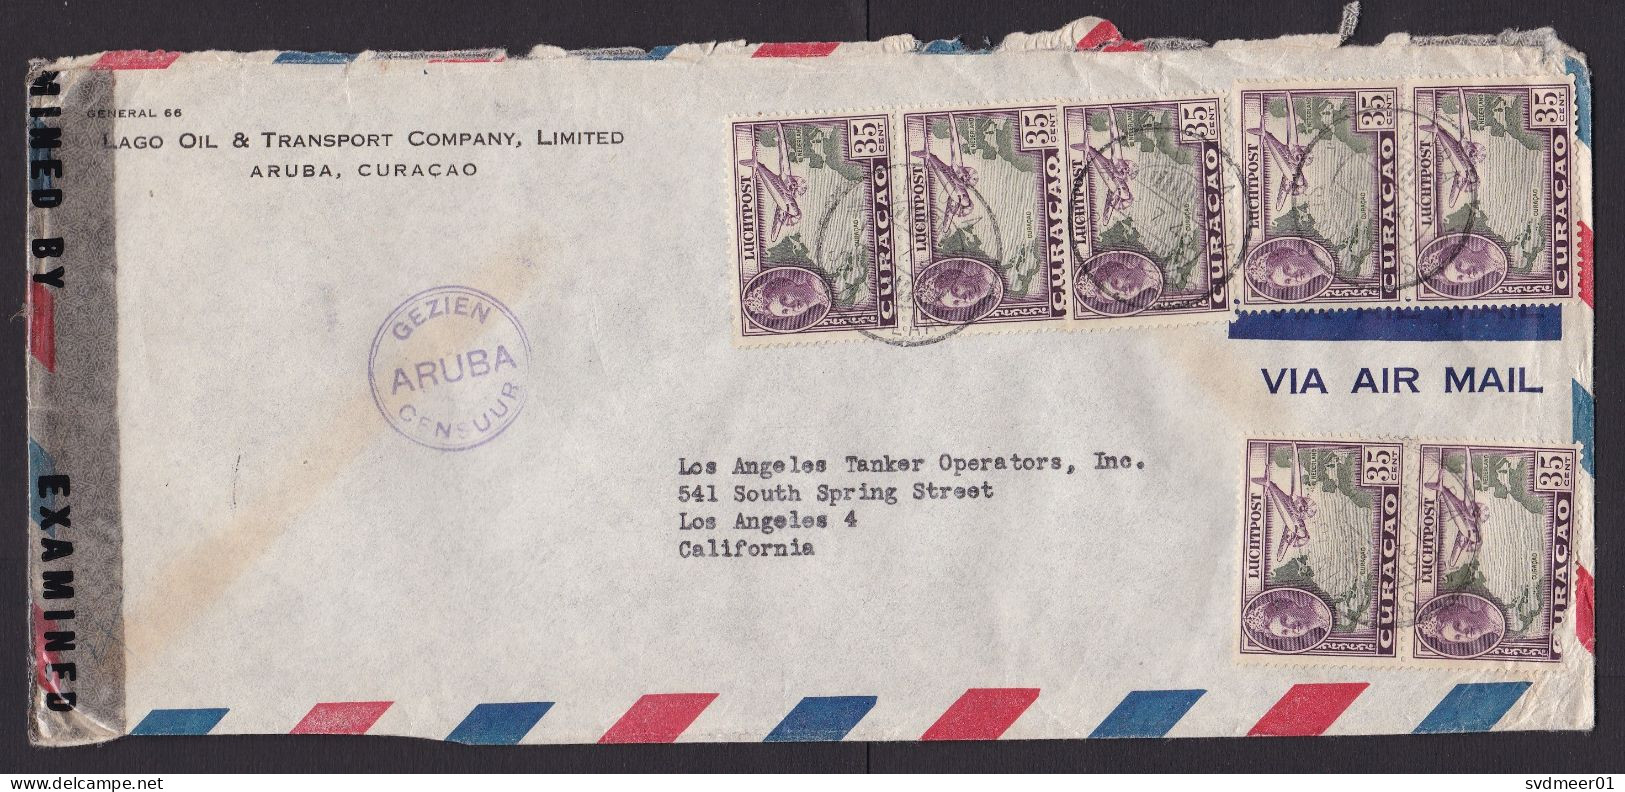 Curacao: Airmail Cover To USA, 1945, 7 Stamps, Map, 2x Censored: US Censor Tape, Aruba Cancel, War, Oil (damaged) - Curaçao, Antille Olandesi, Aruba